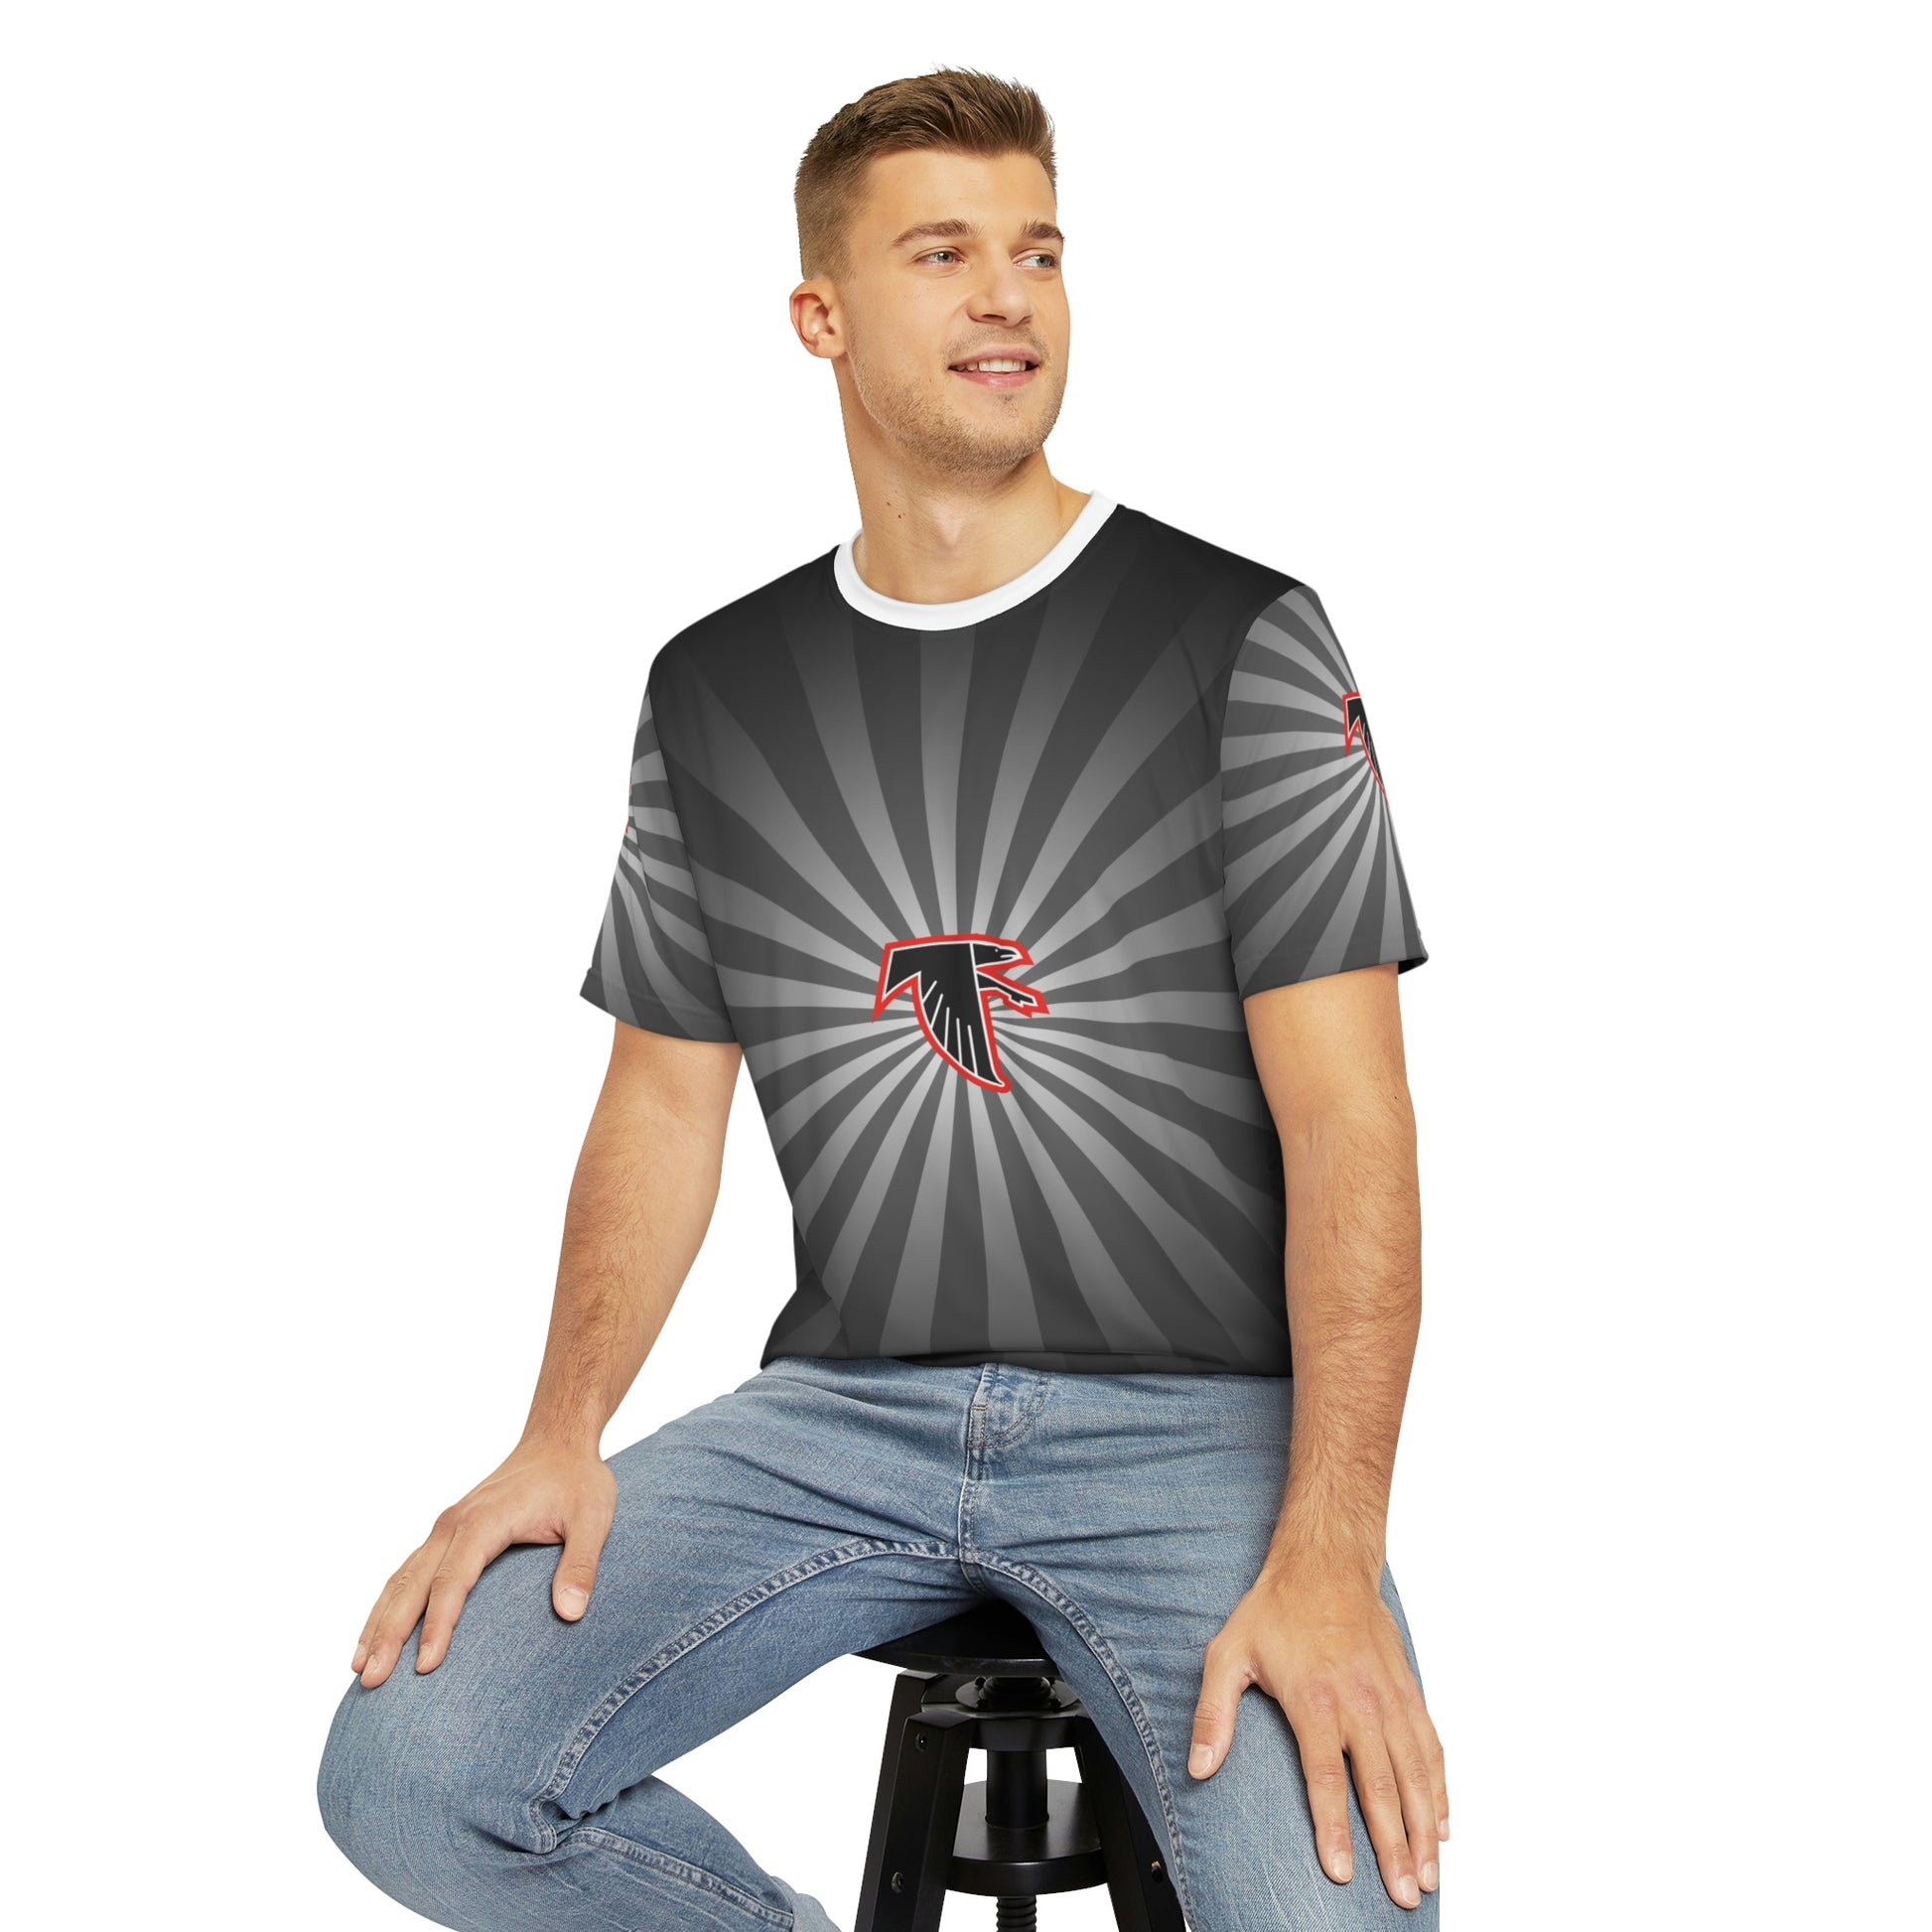 Geotrott NFL Atlanta Falcons Men's Polyester All Over Print Tee T-Shirt-All Over Prints-Geotrott